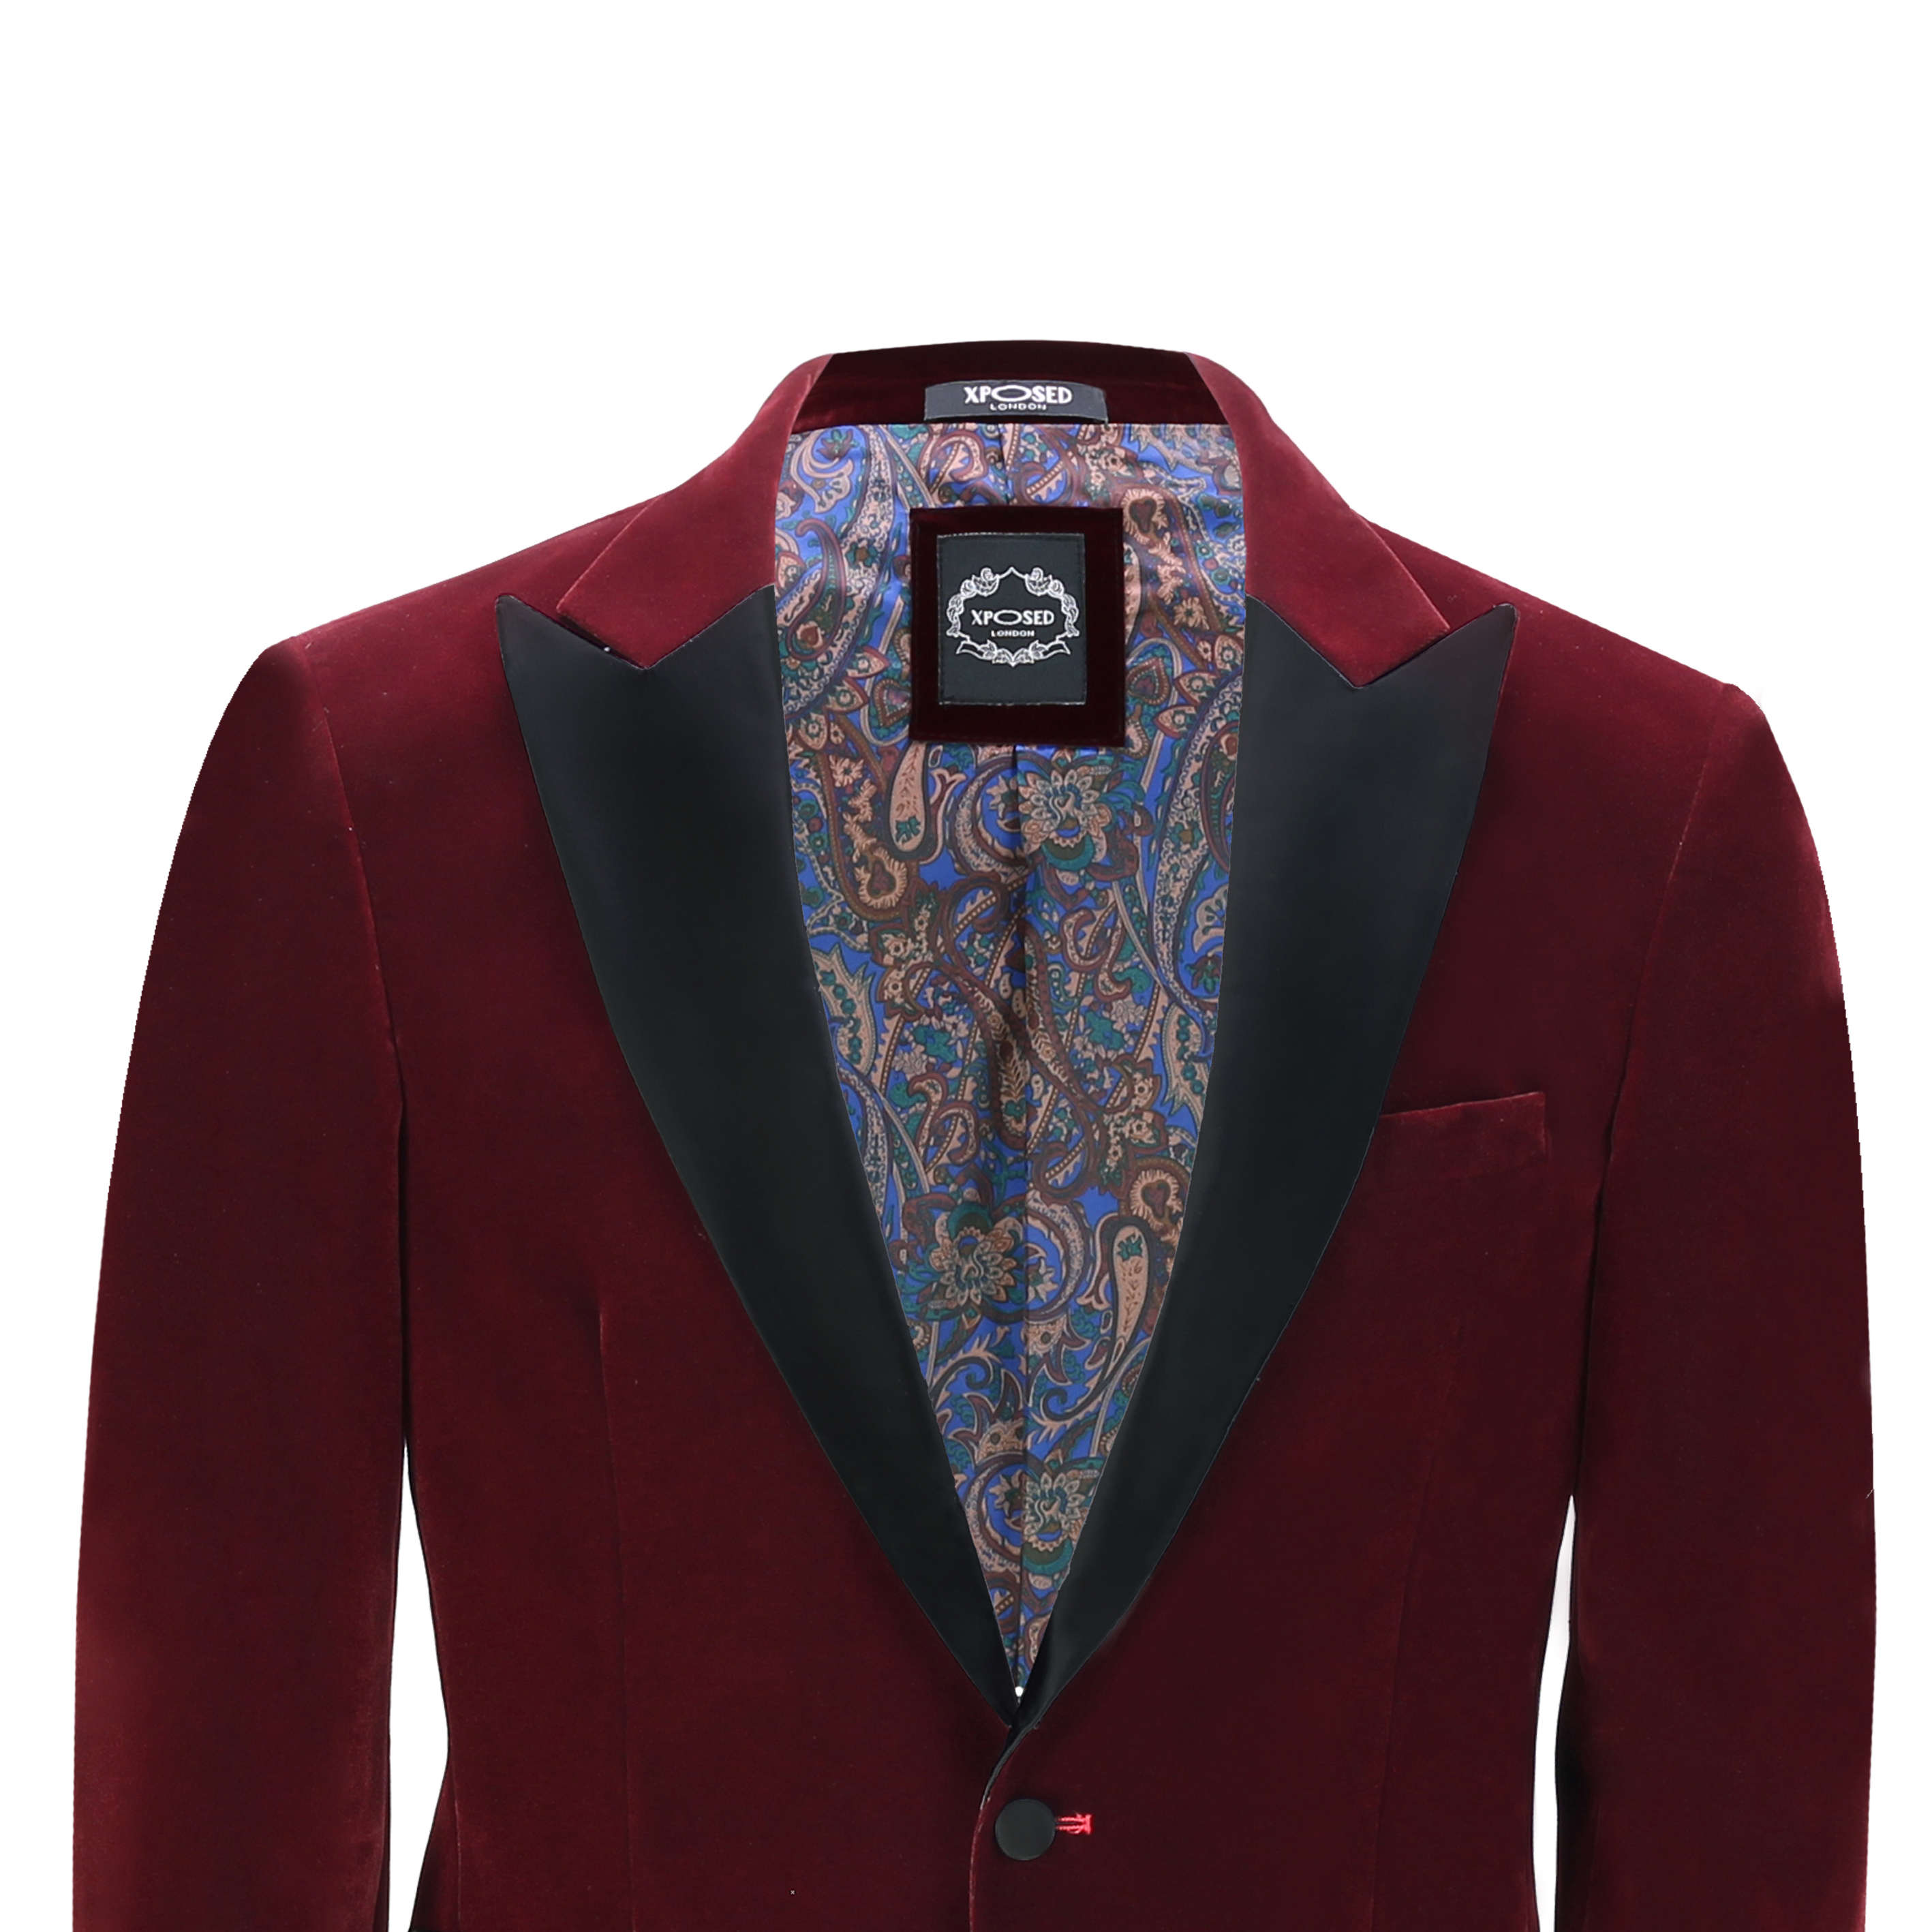 Item Sold Separately Mens Maroon Velvet Tux Dinner Jacket Vintage 3 Piece Suit